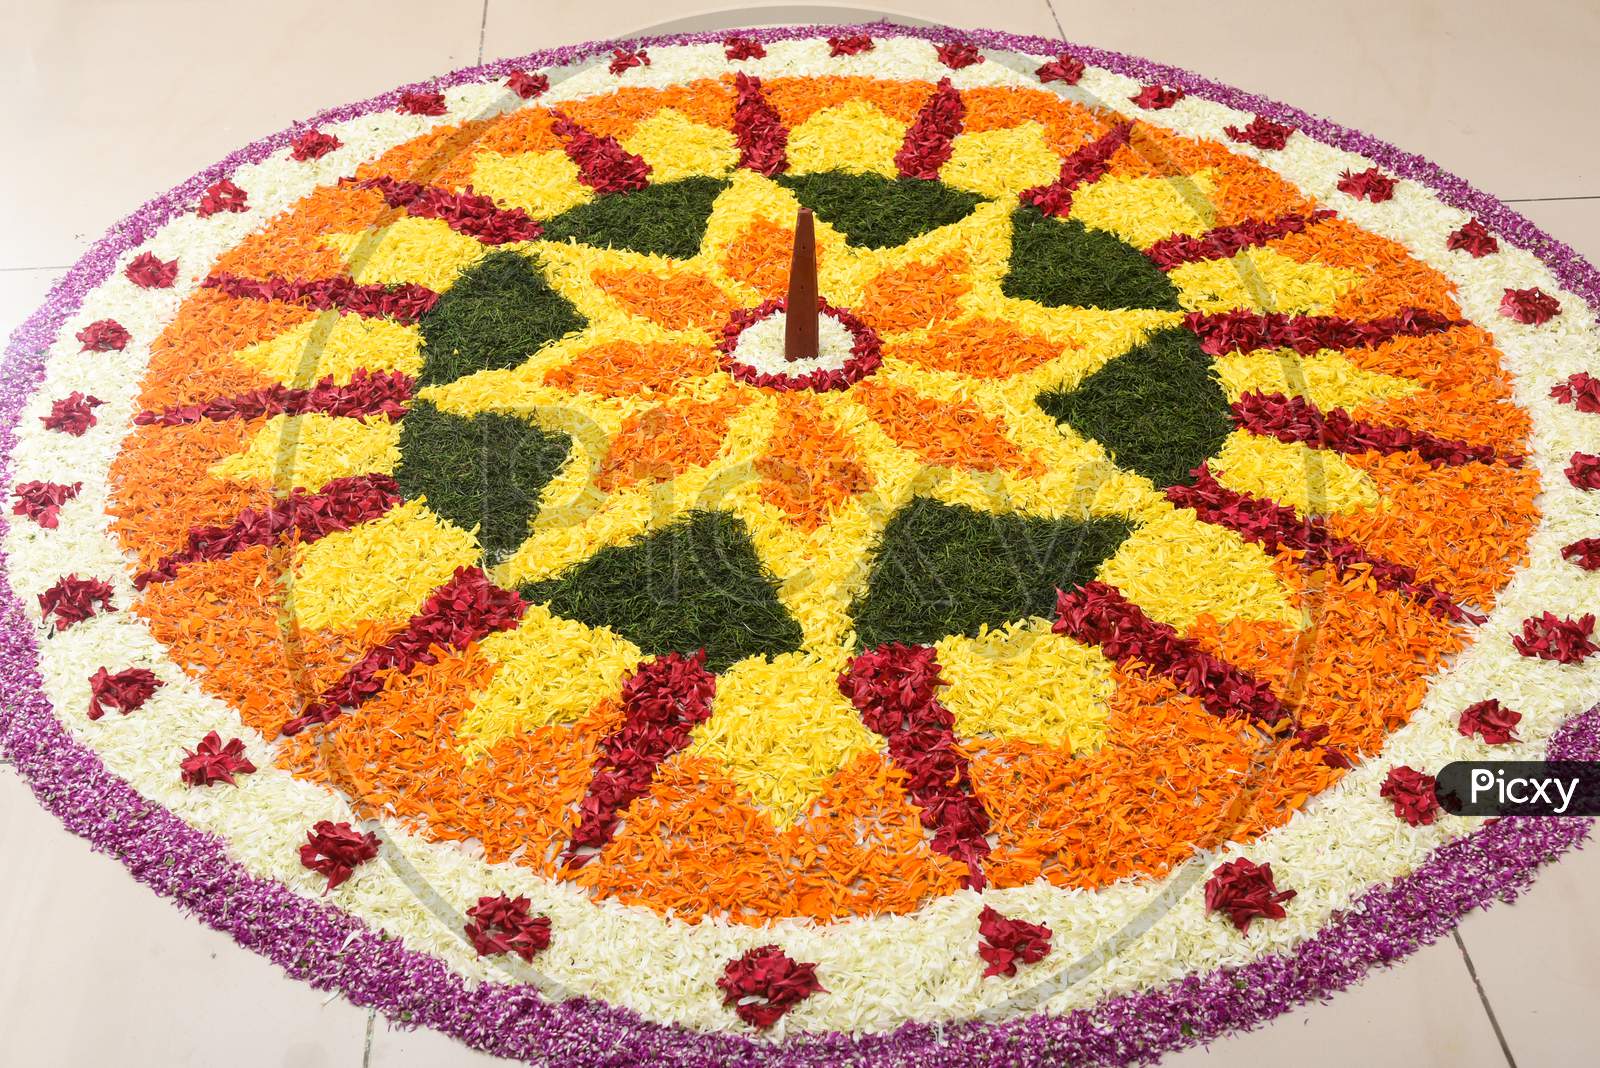 Kerala Onam harvest festival Flower bed, Pookalam